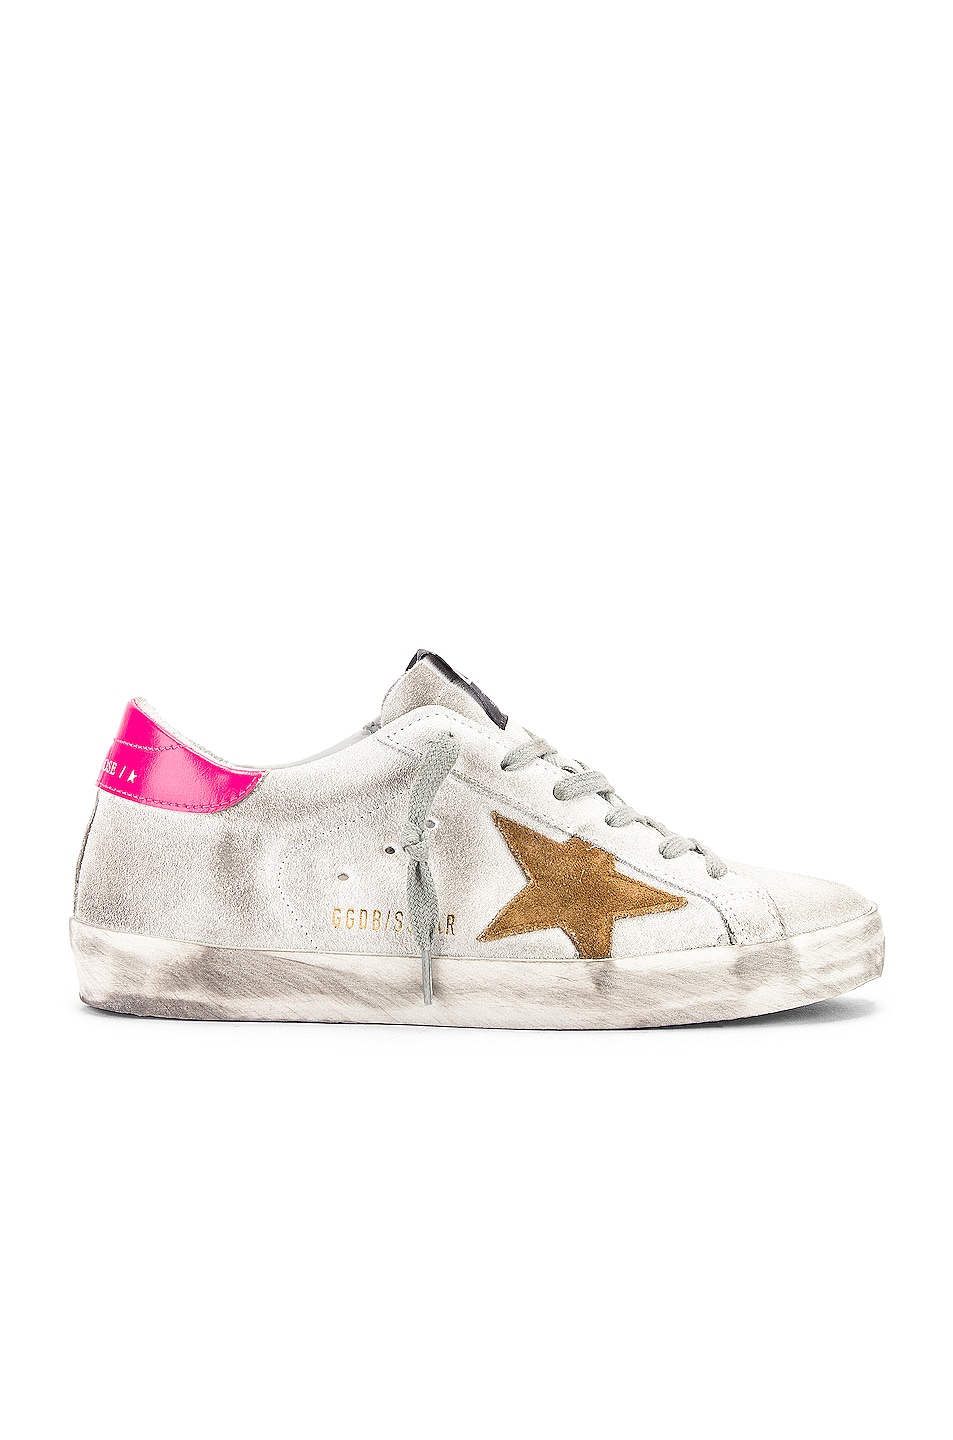 Golden Goose Superstar Sneaker in White & Shocking Pink | FWRD